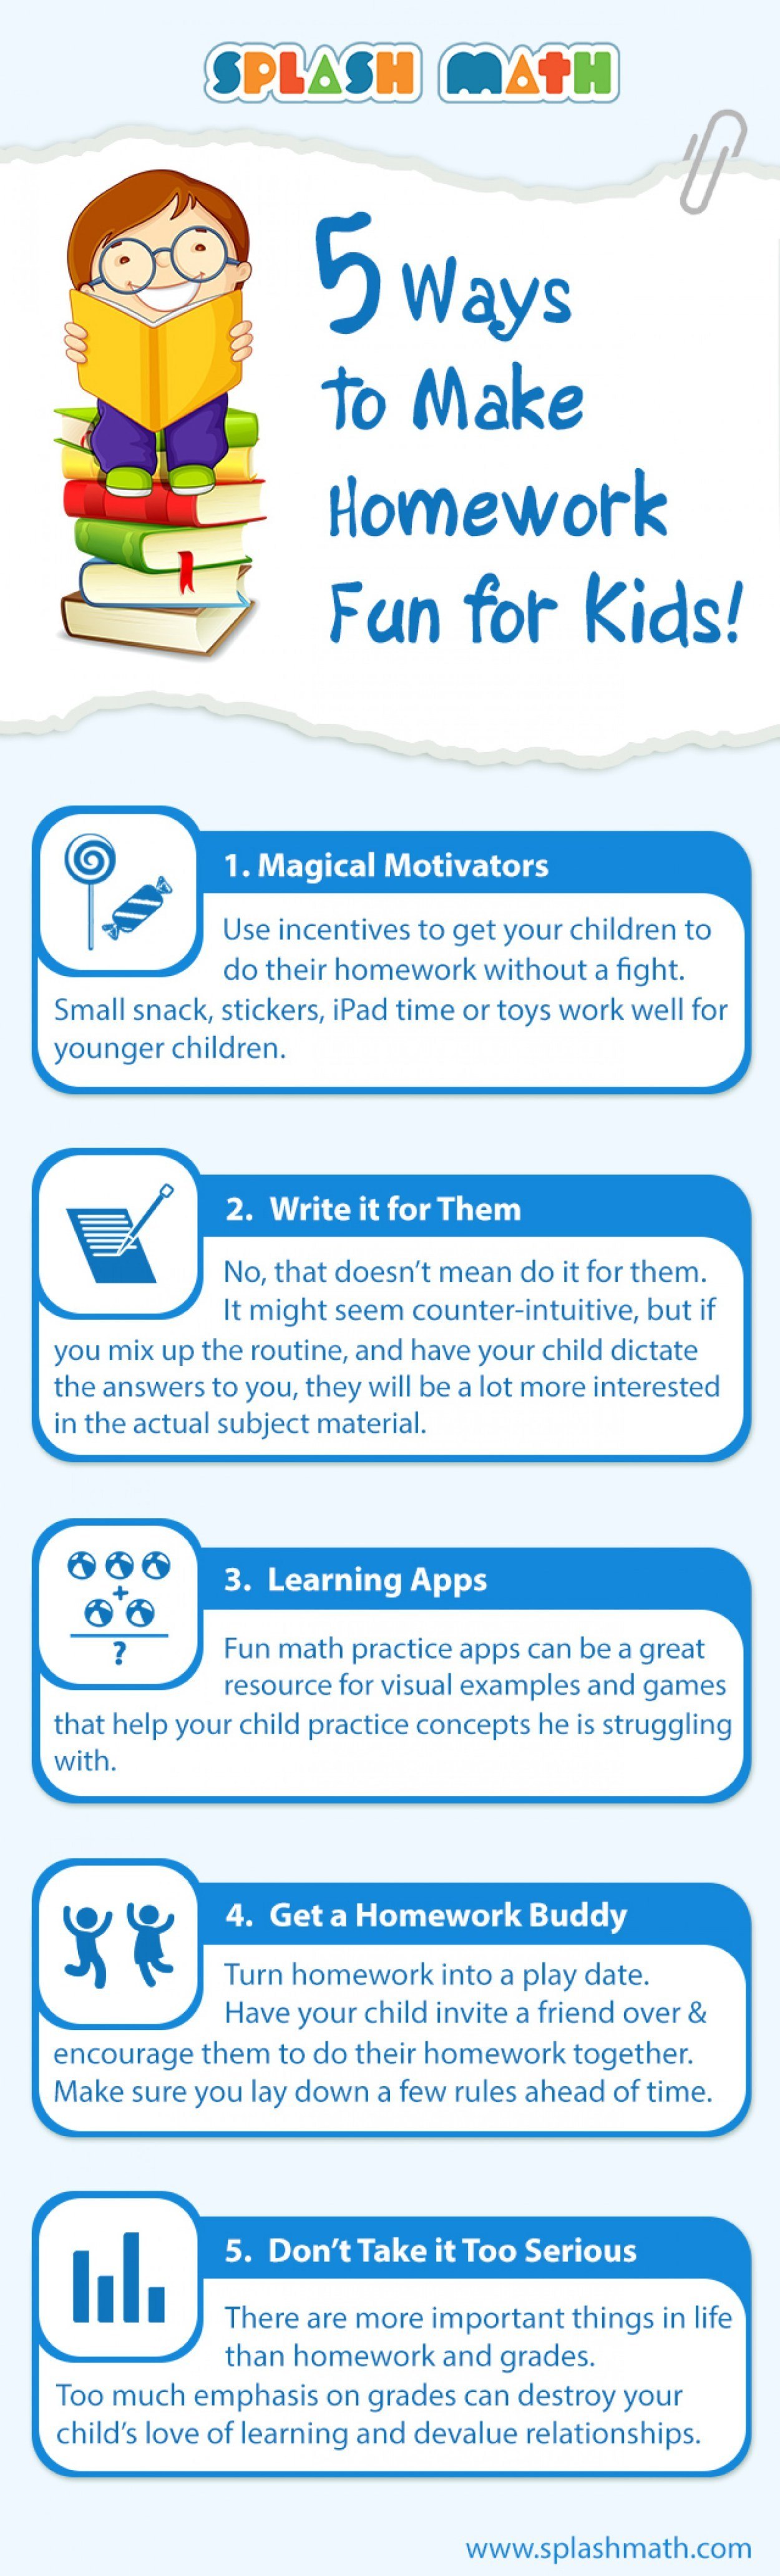 5 Ways to Make Homework Fun for Kids Infographic